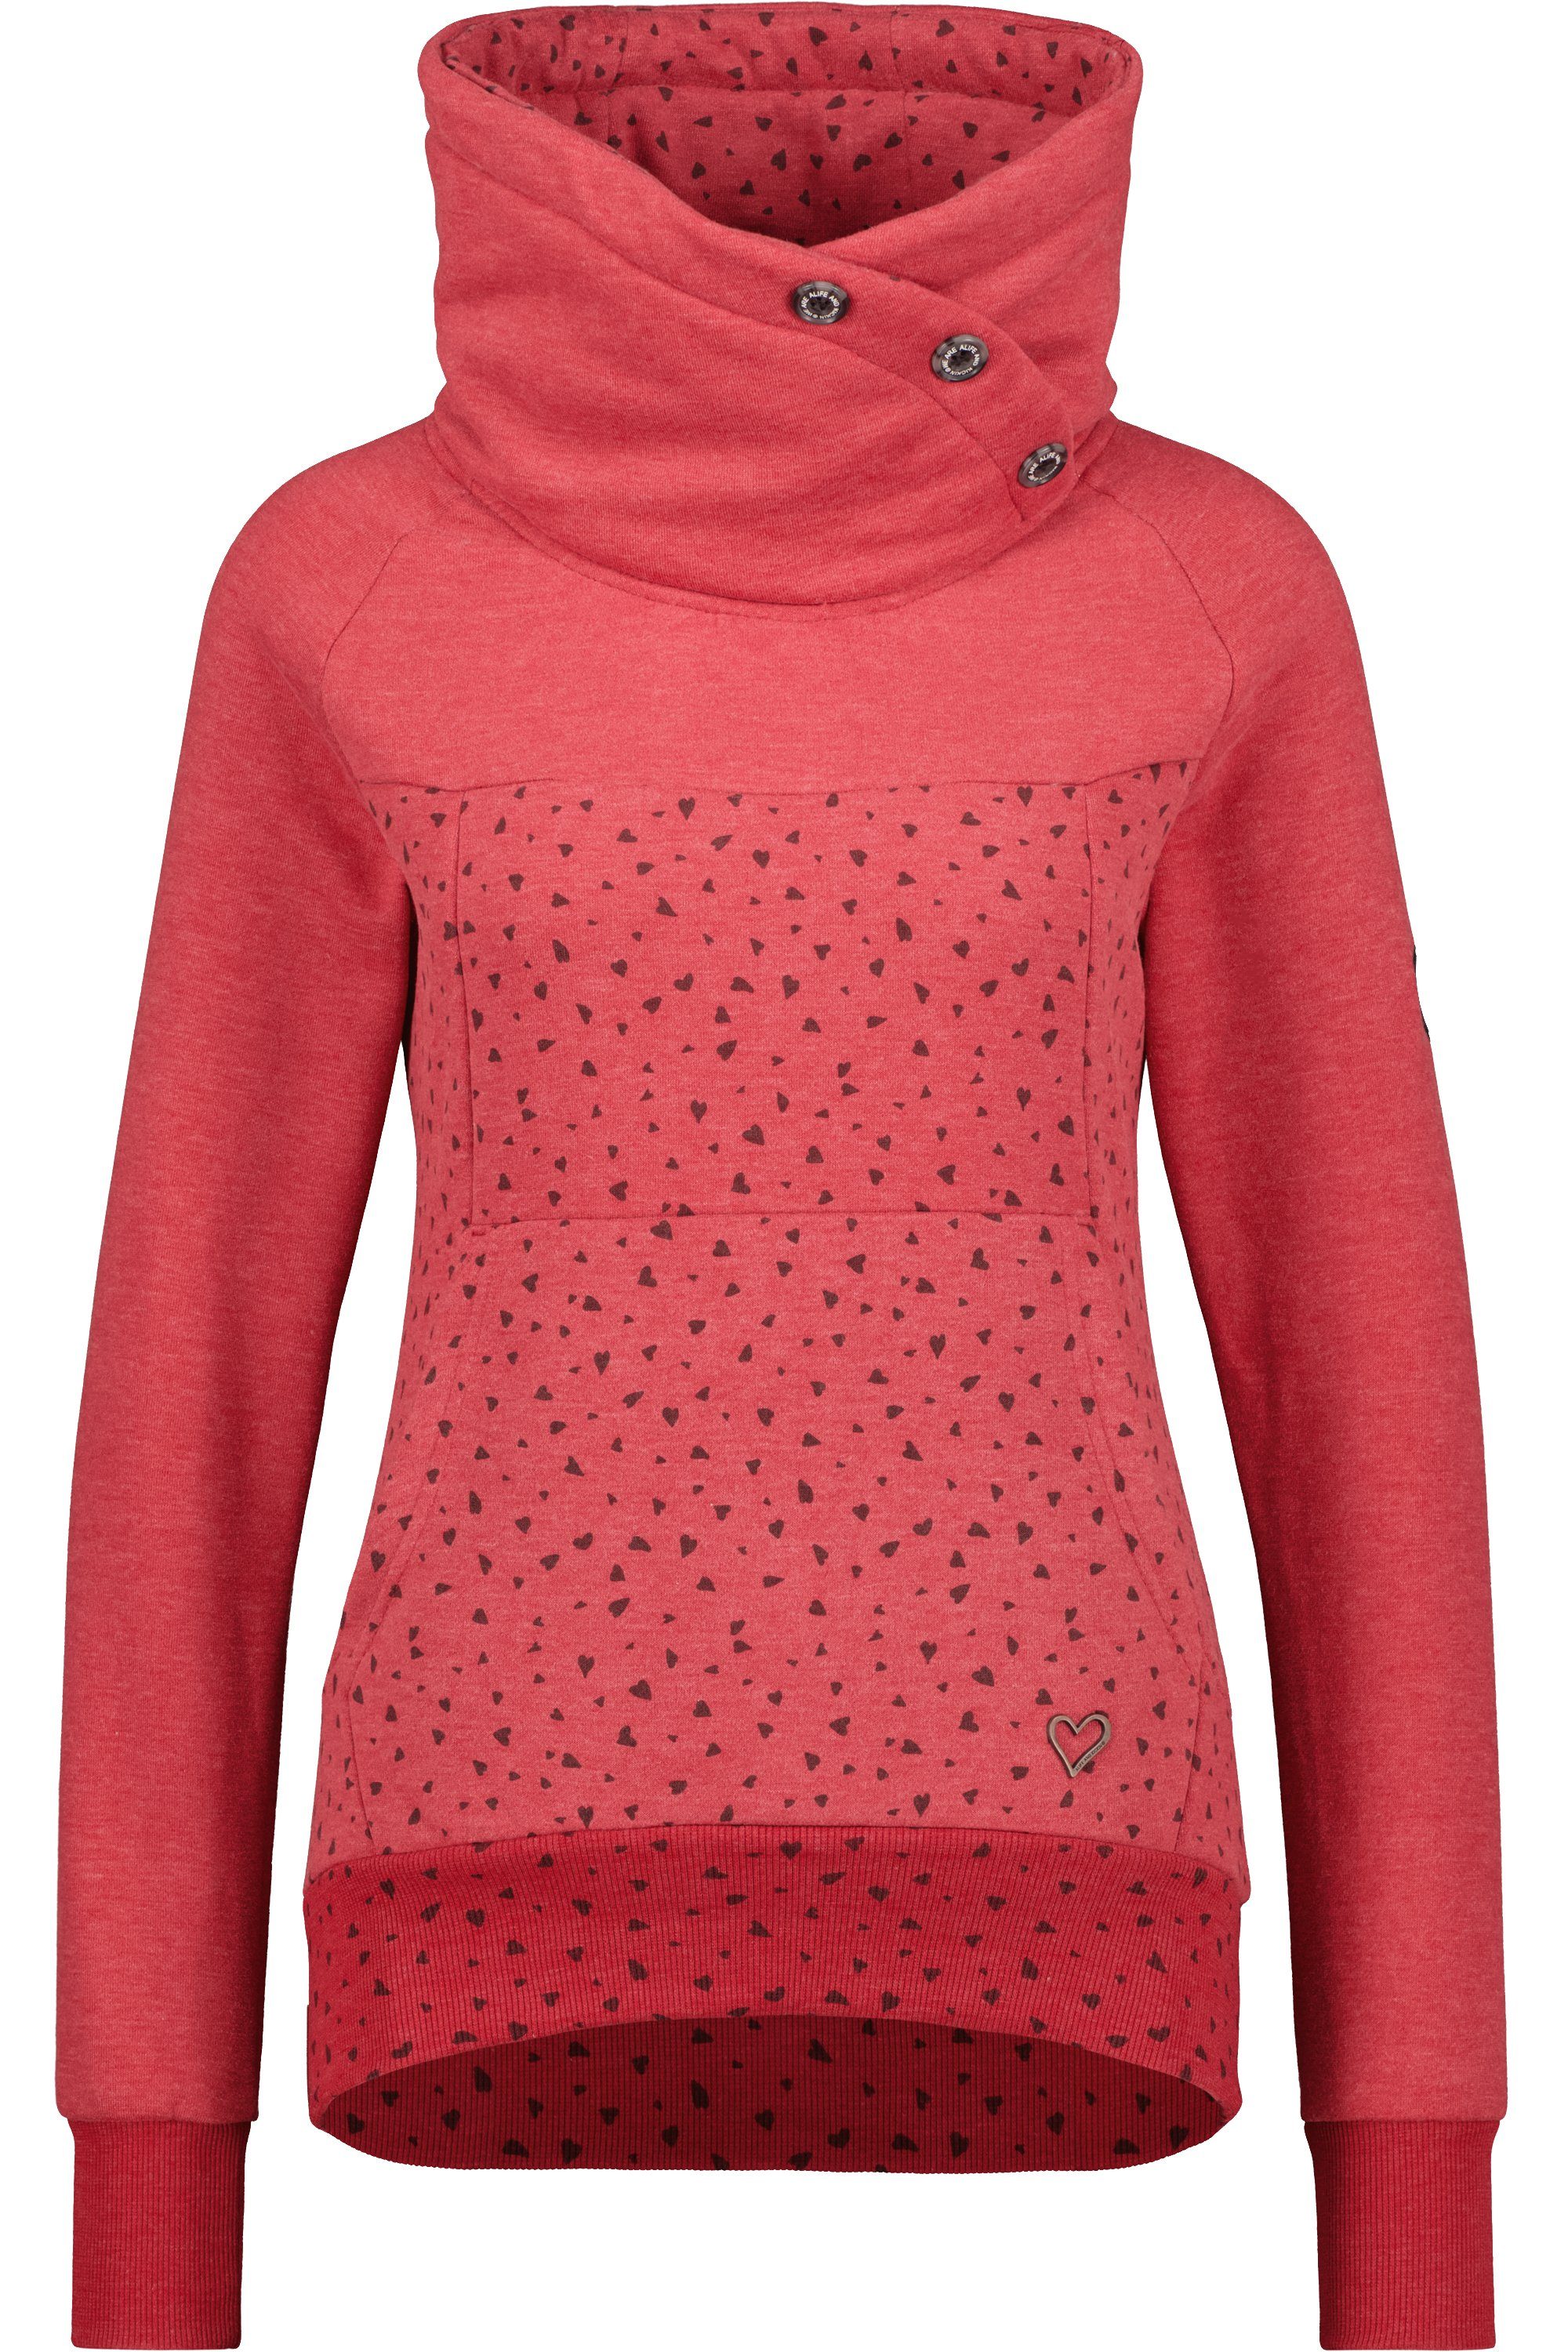 Alife Kickin melange VioletAK Sweatshirt cranberry B Sweat & Sweatshirt Damen